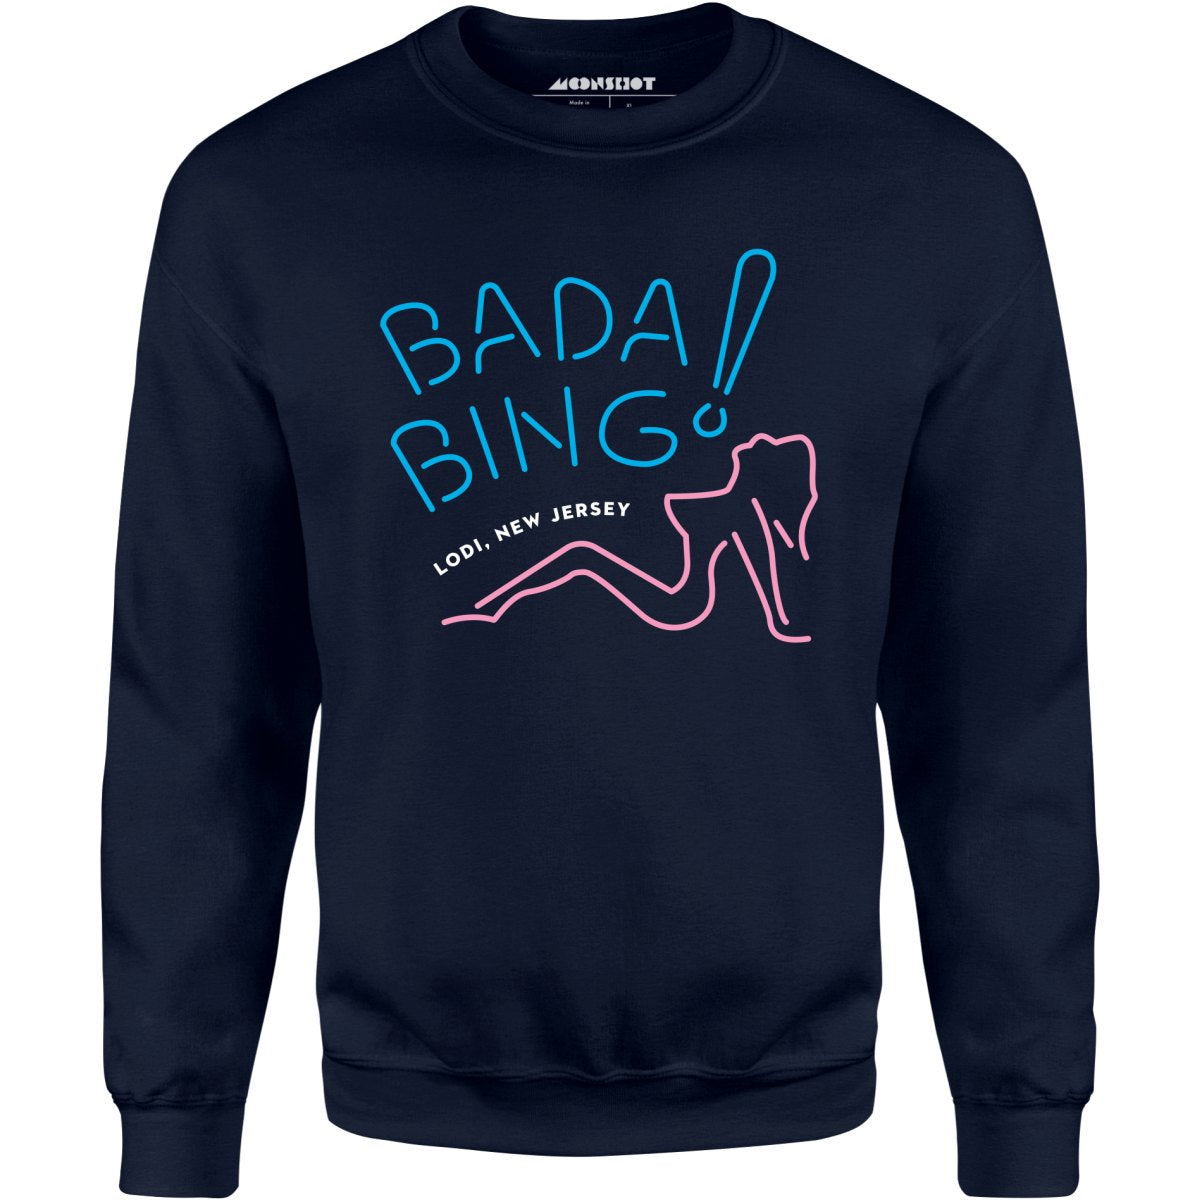 Bada Bing - The Sopranos - Unisex Sweatshirt